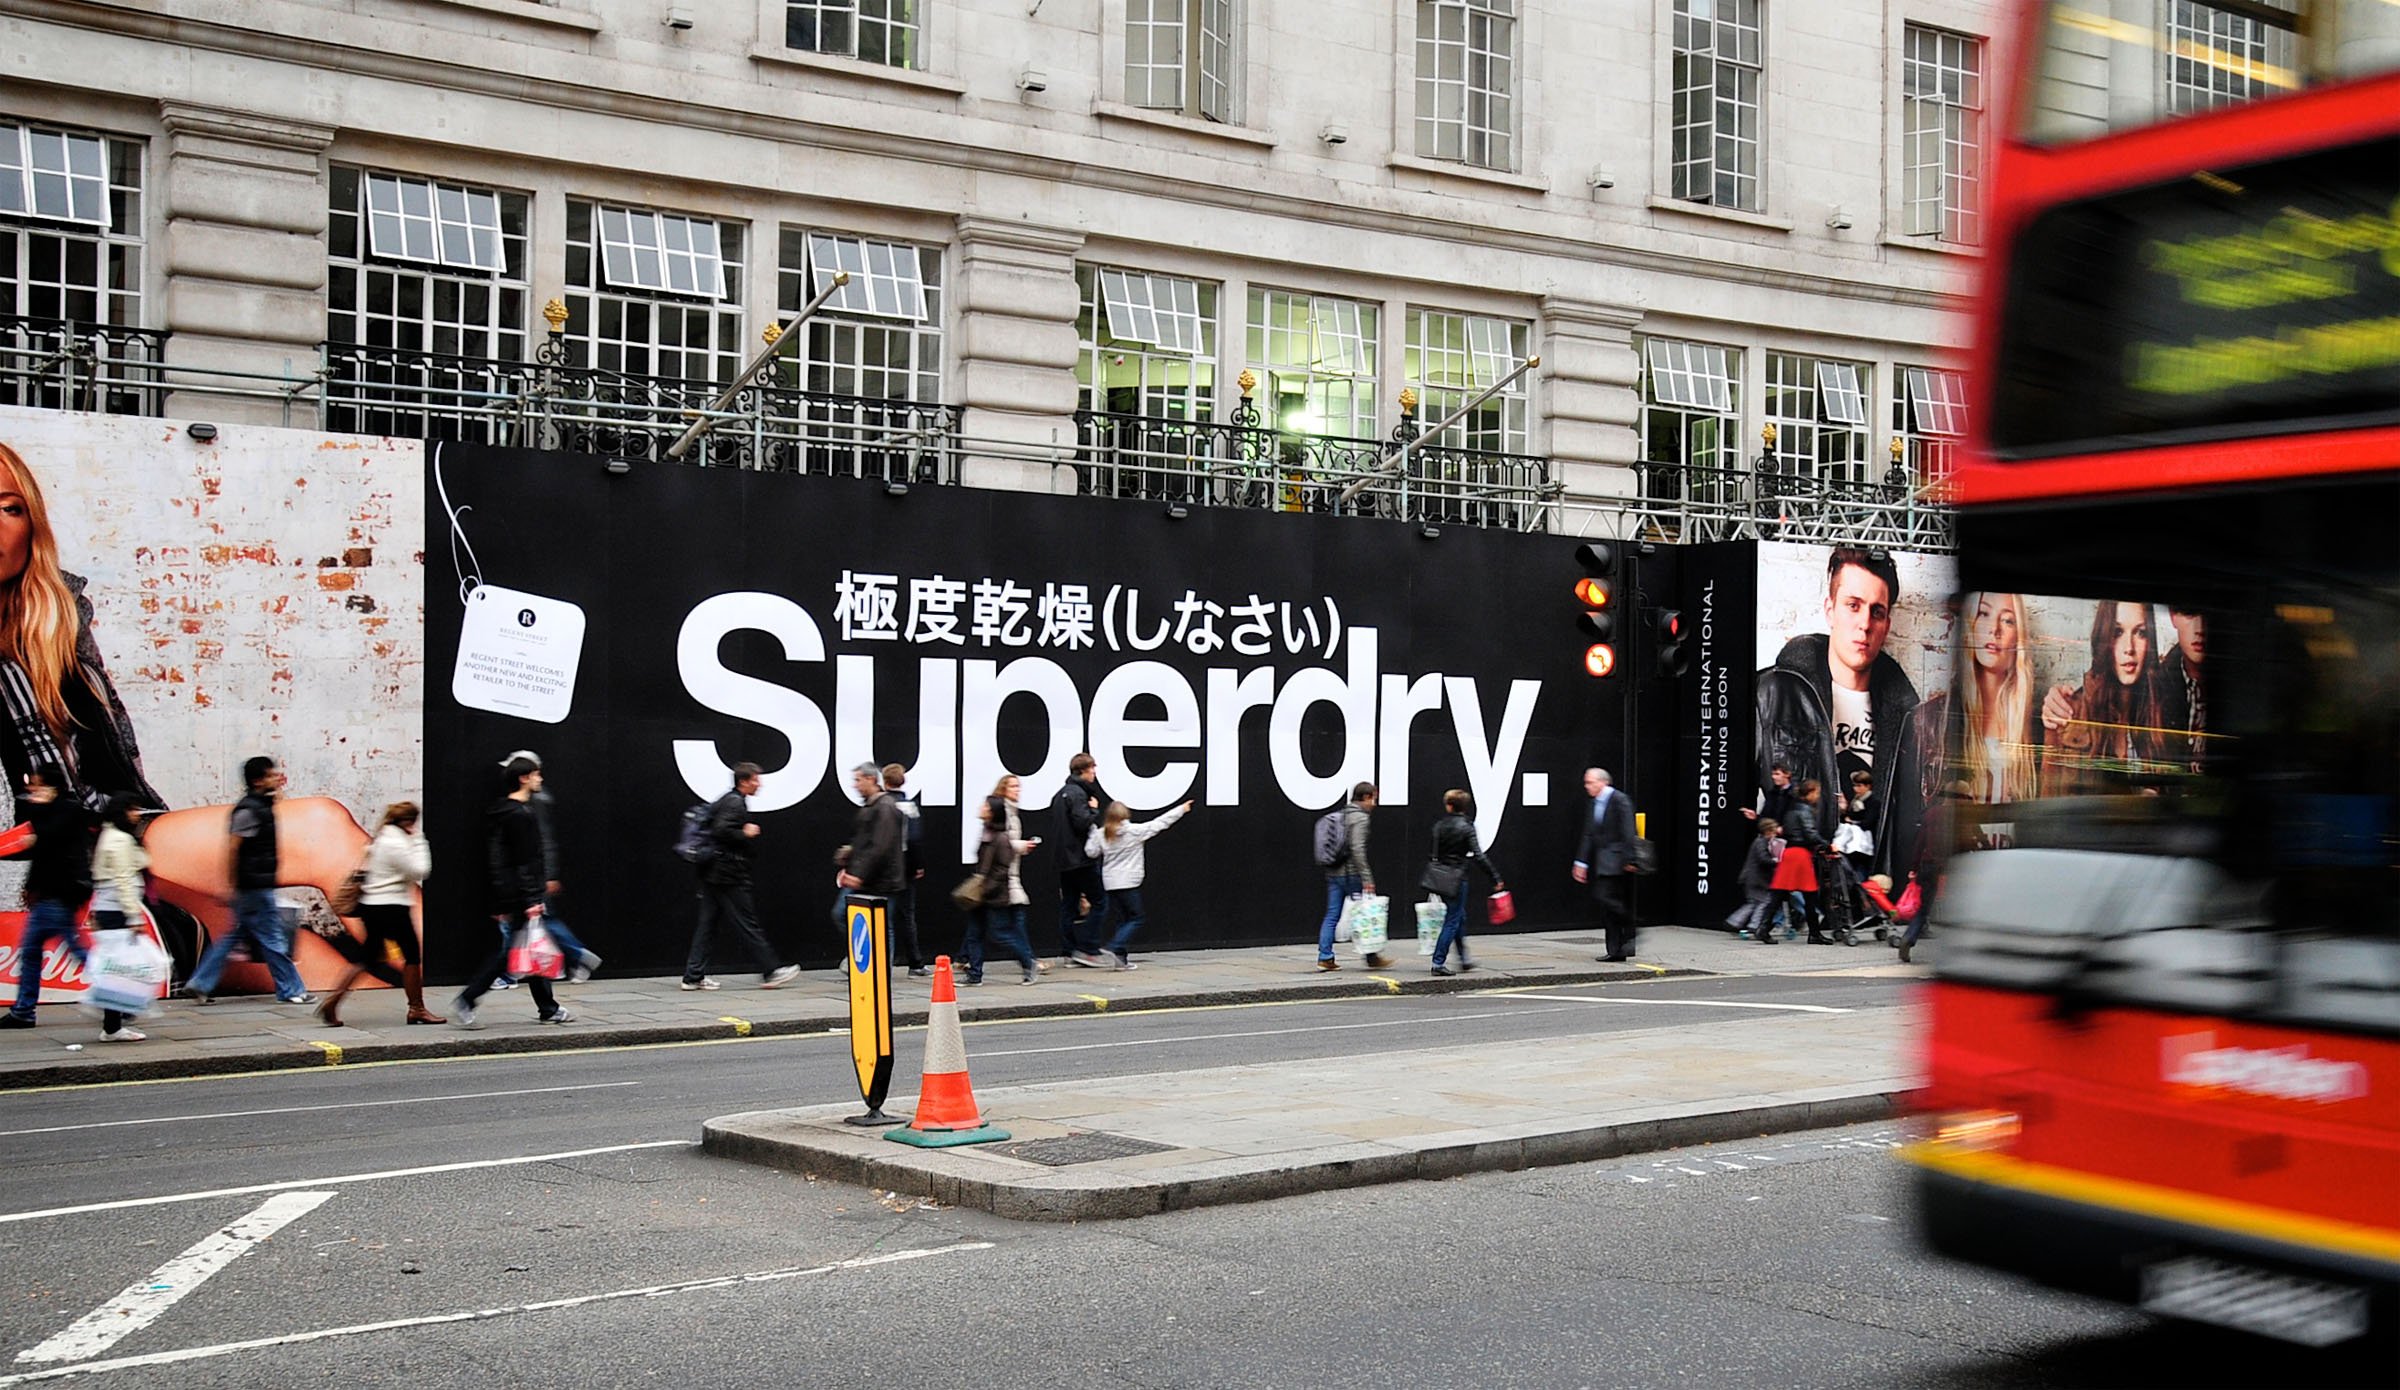 Disruption hoarding for Superdry in London's Regent Street